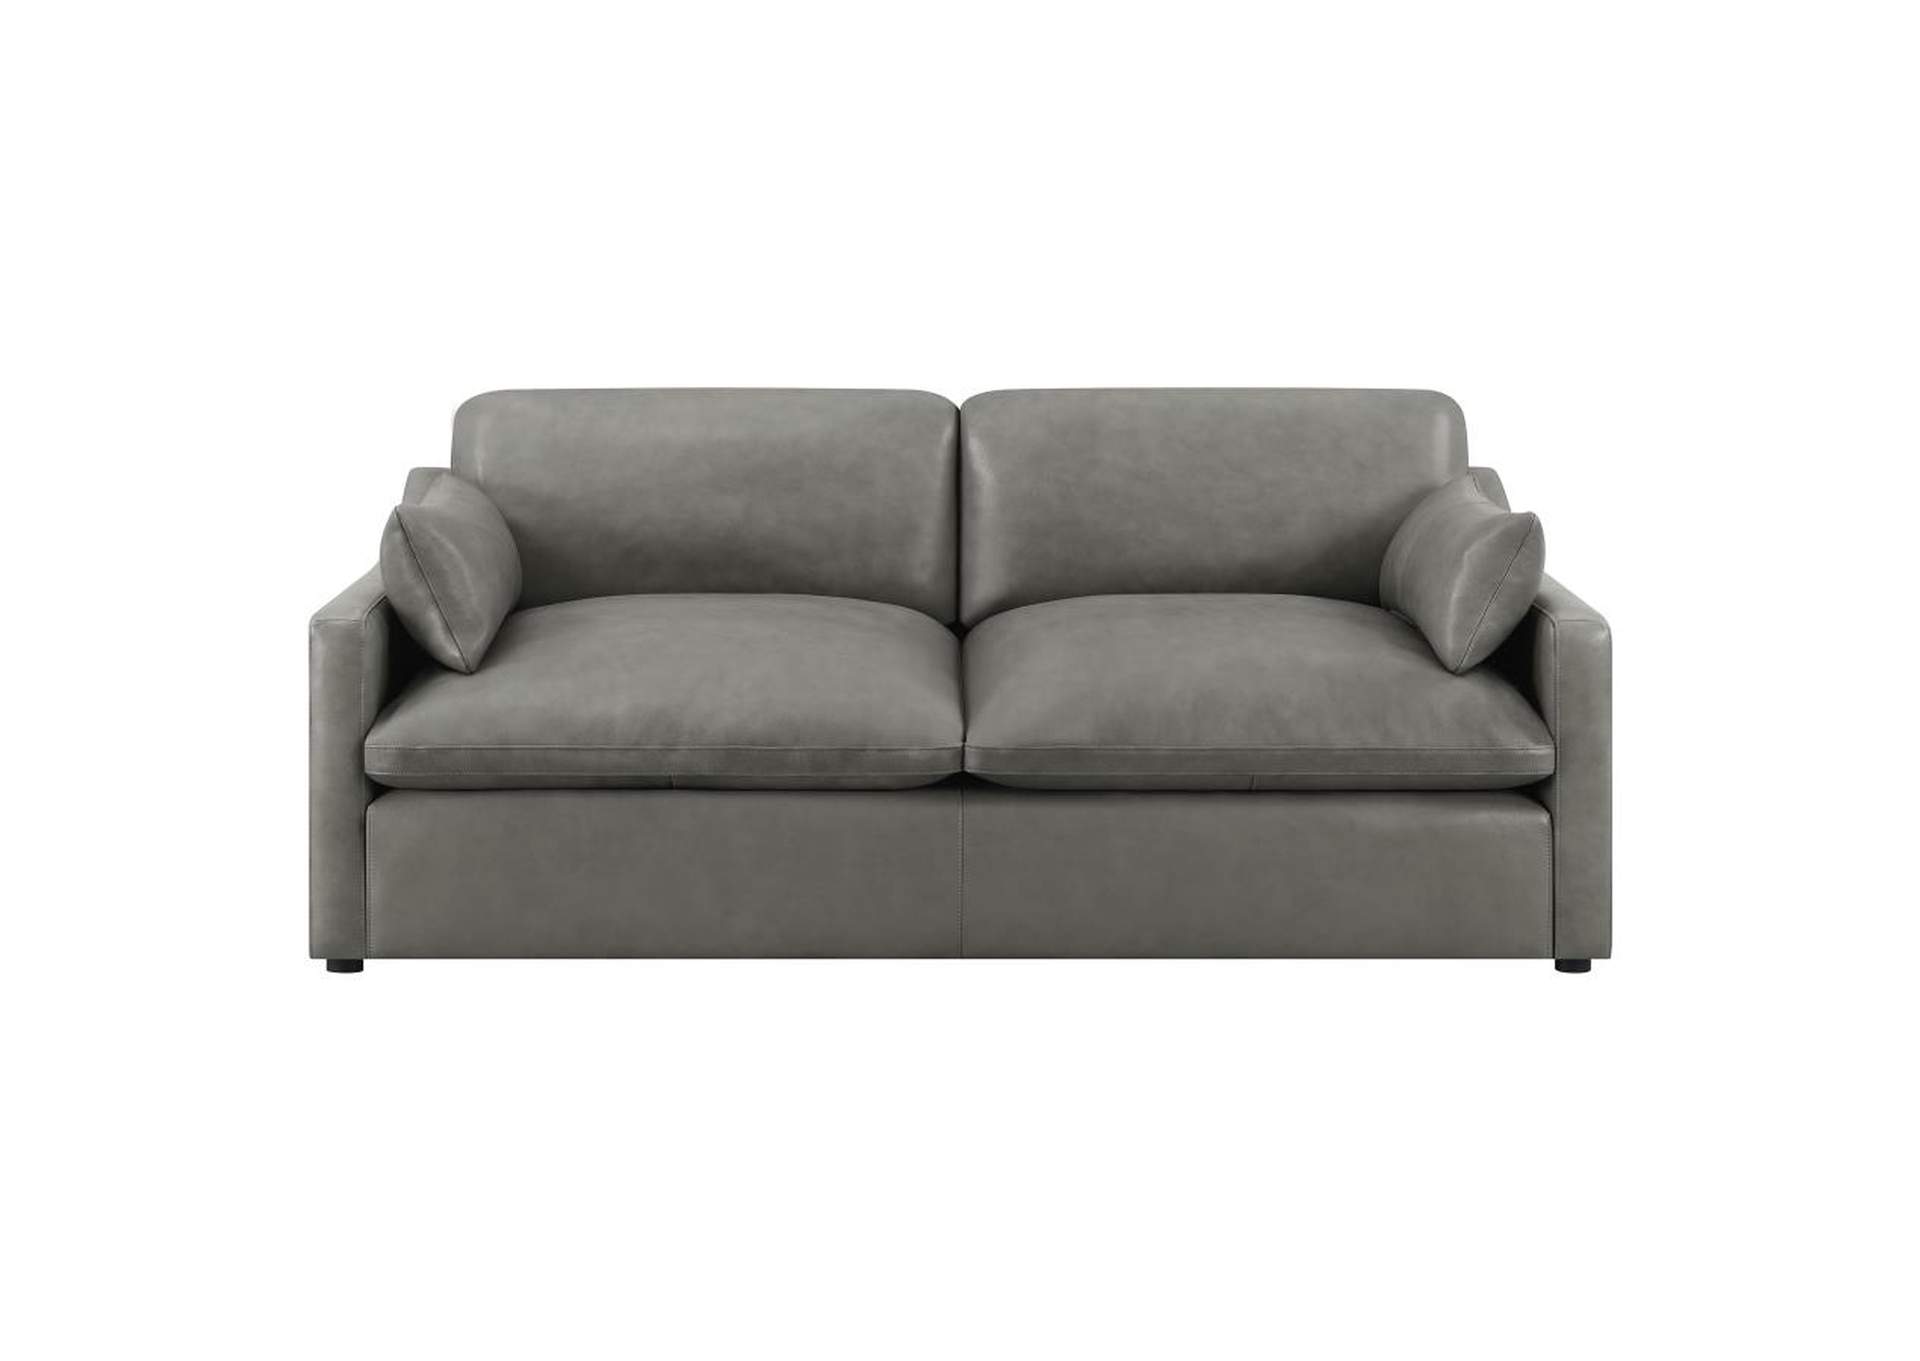 Grayson 2 - piece Sloped Arm Upholstered Living Room Set Grey,Coaster Furniture